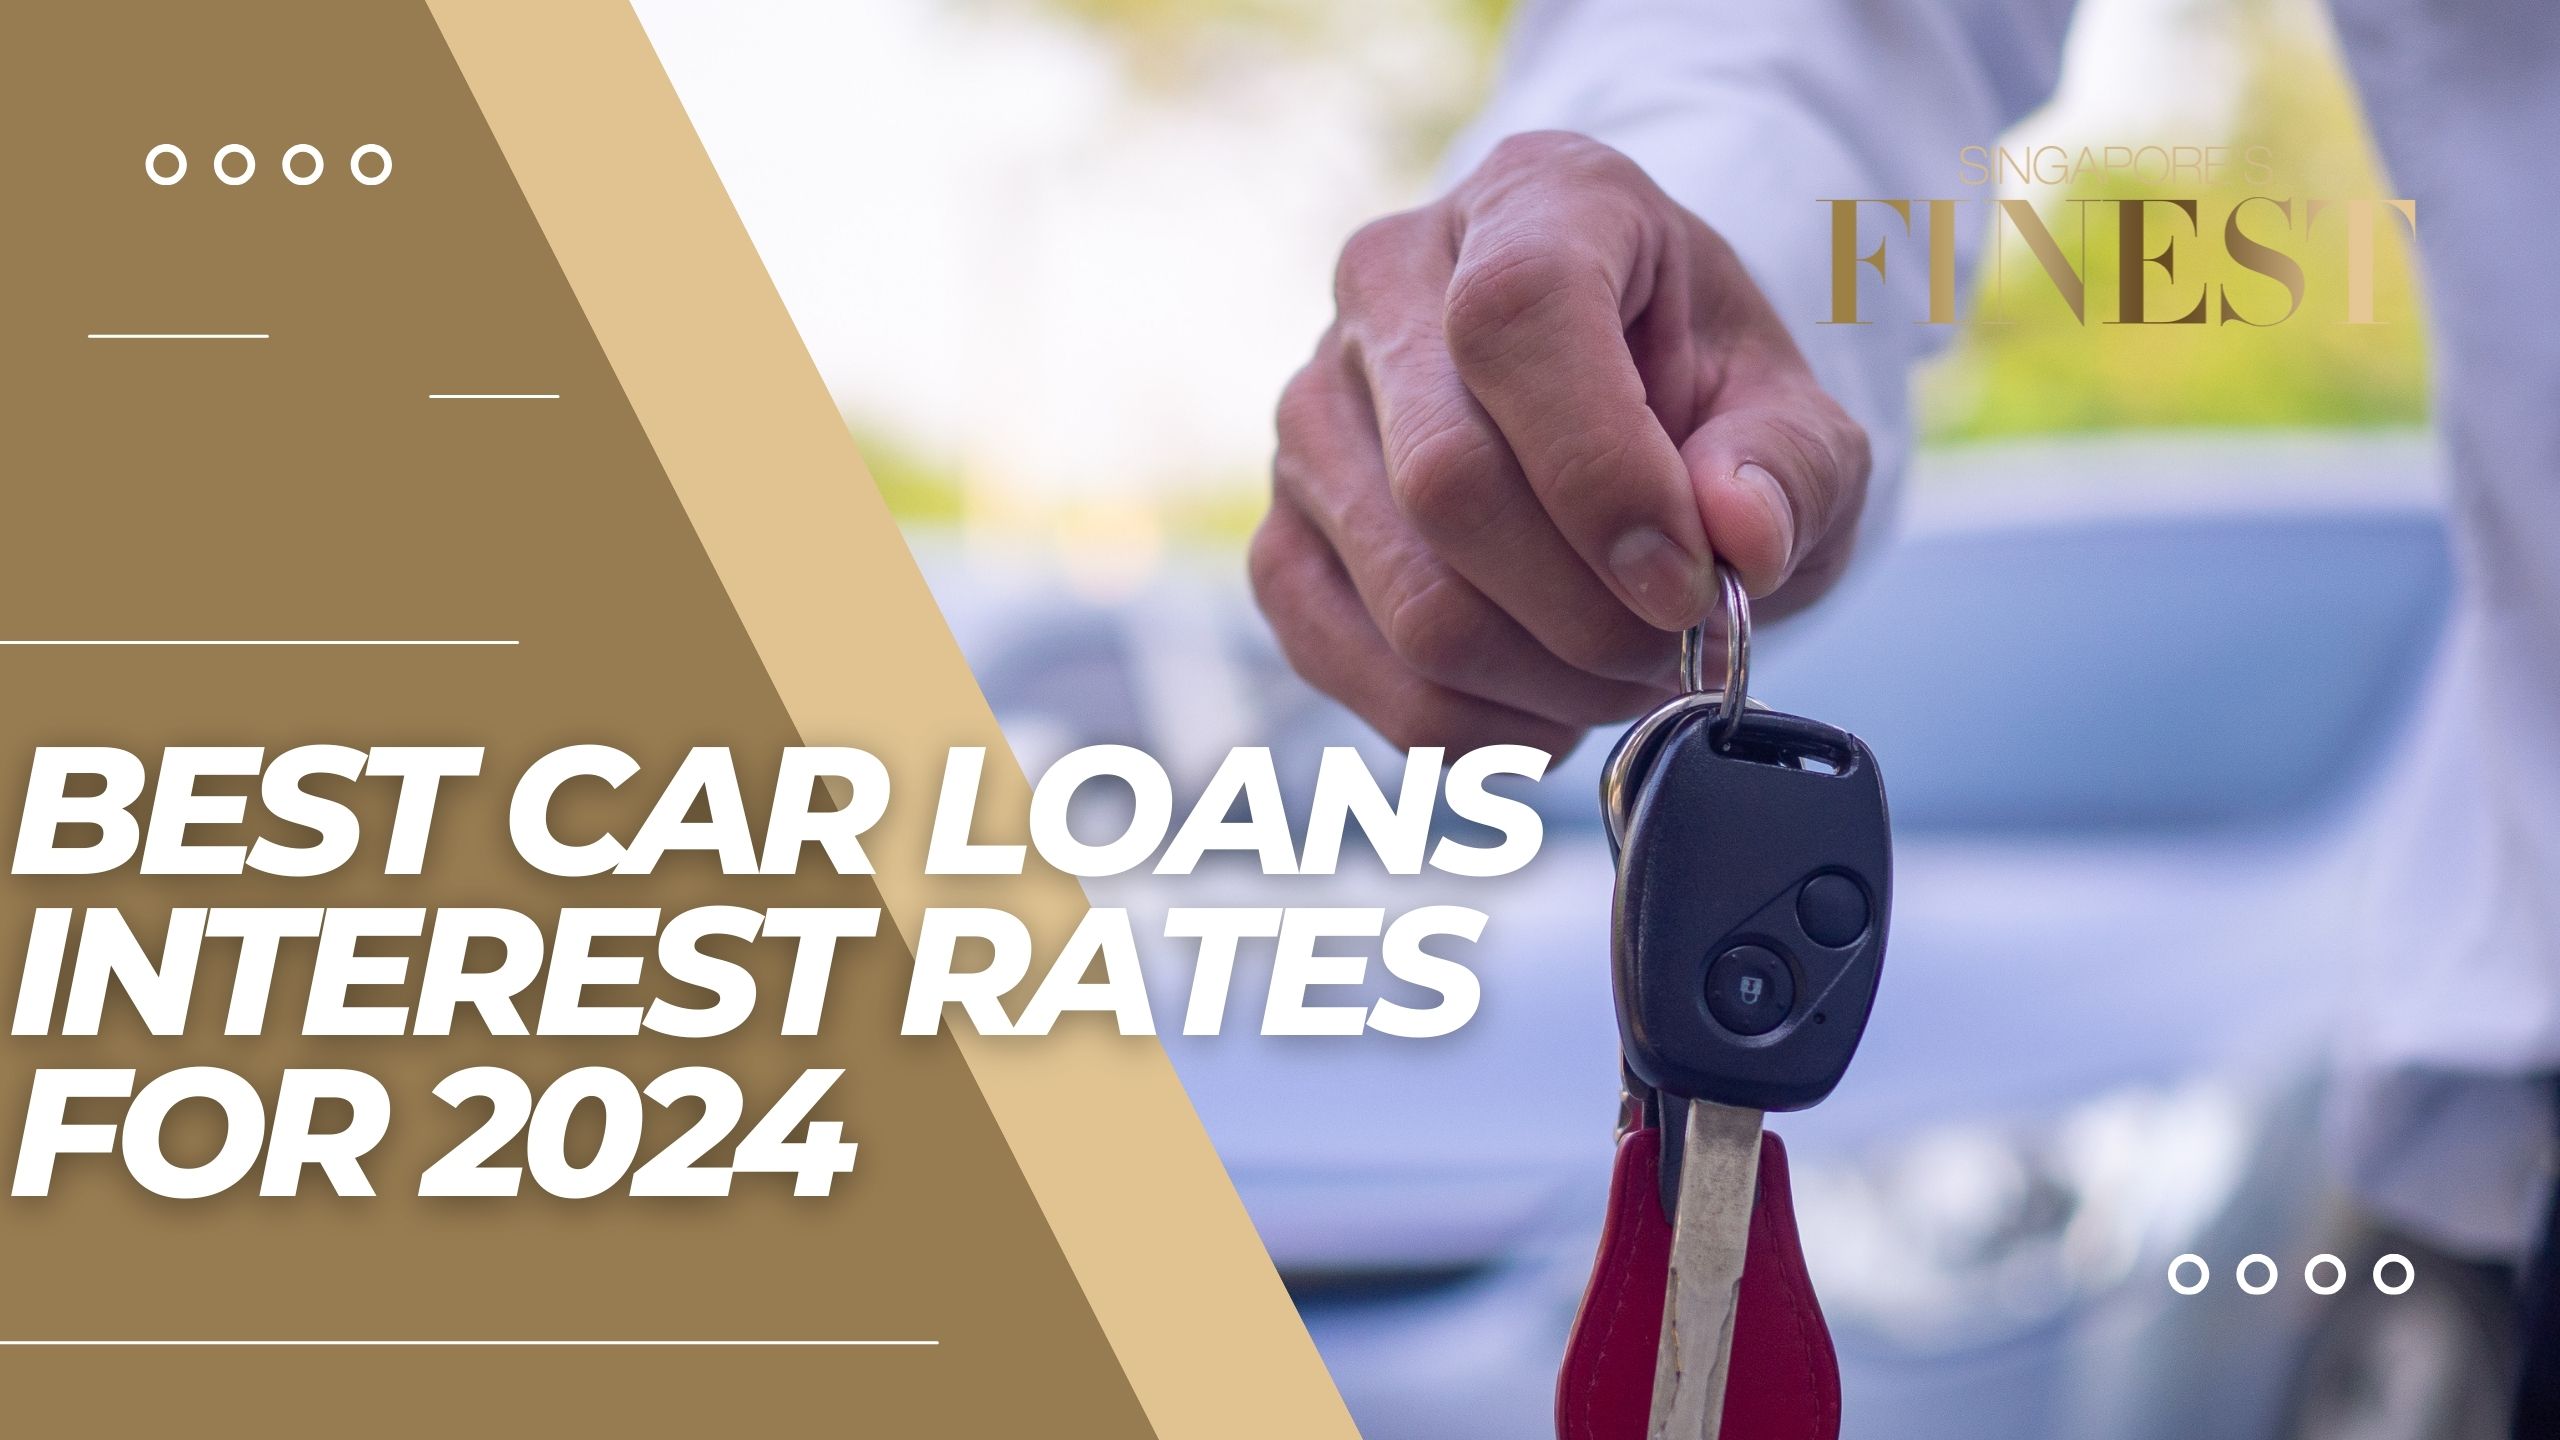 Best Car Loans Interest Rates for 2024